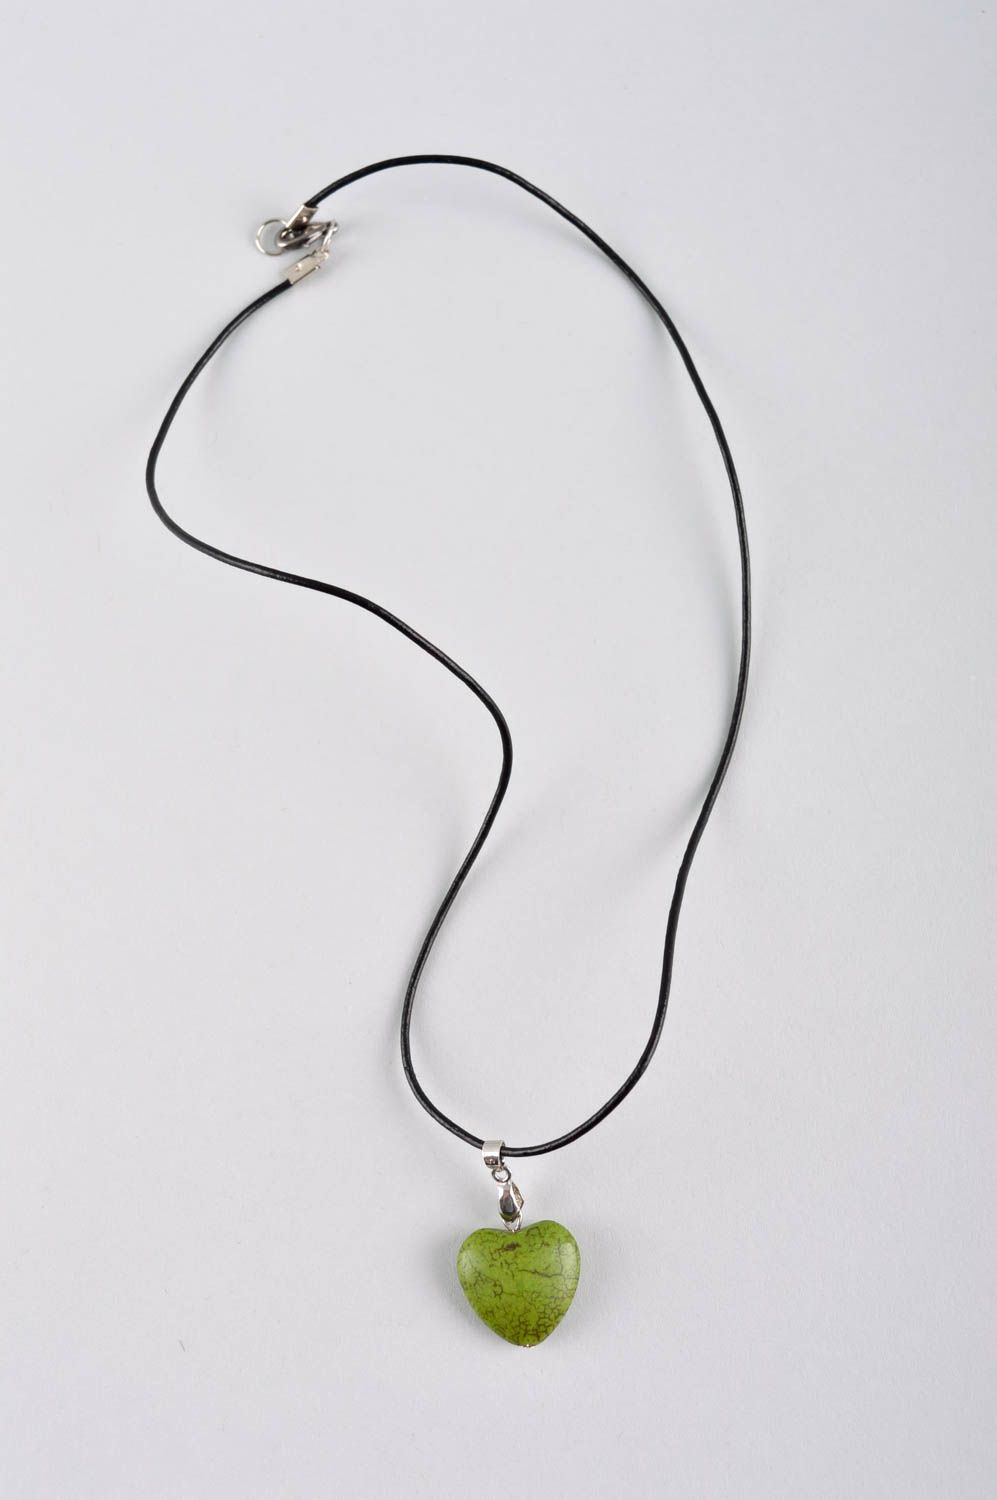 Handmade necklace designer earrings unusual jewelry gift ideas jewelry set photo 3